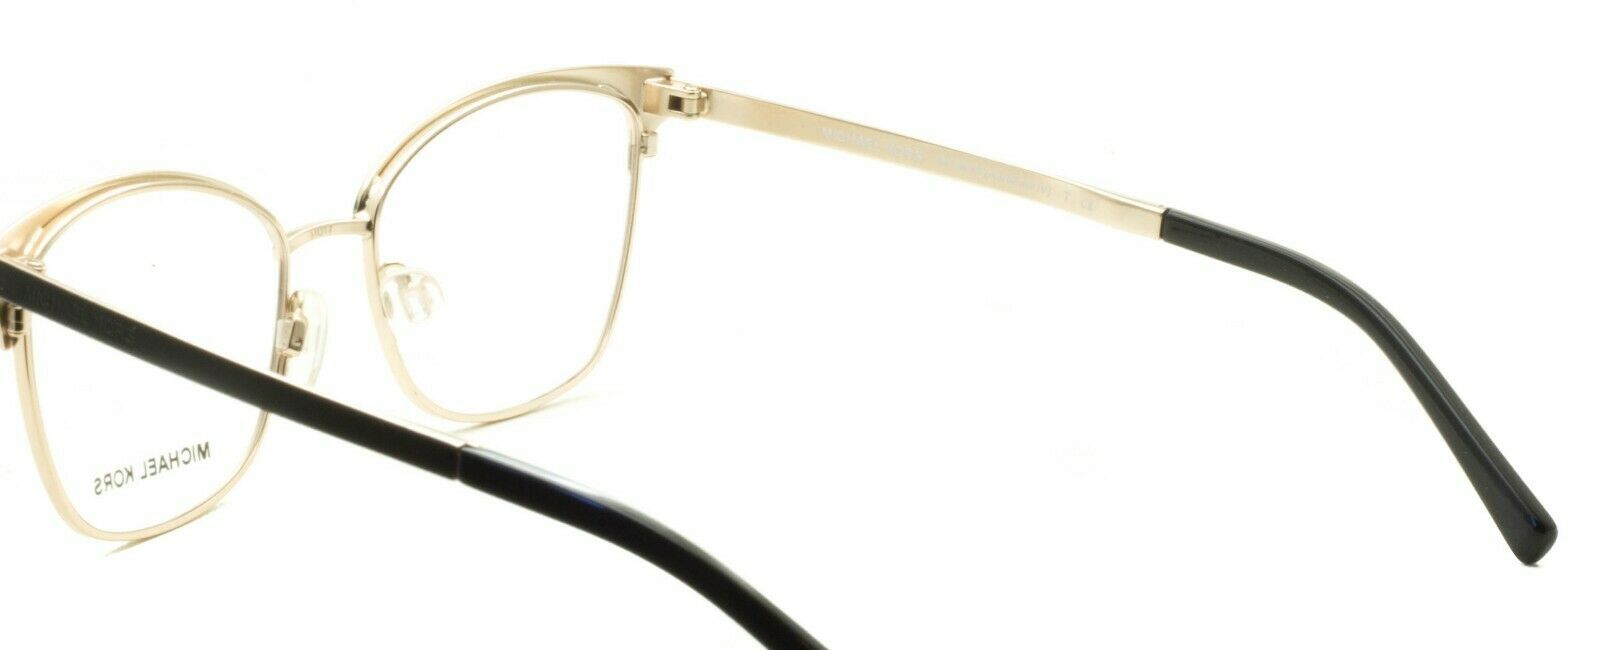 MICHAEL KORS MK 3012 1113 (Adrianna IV) Eyewear FRAMES RX Optical Glasses - New